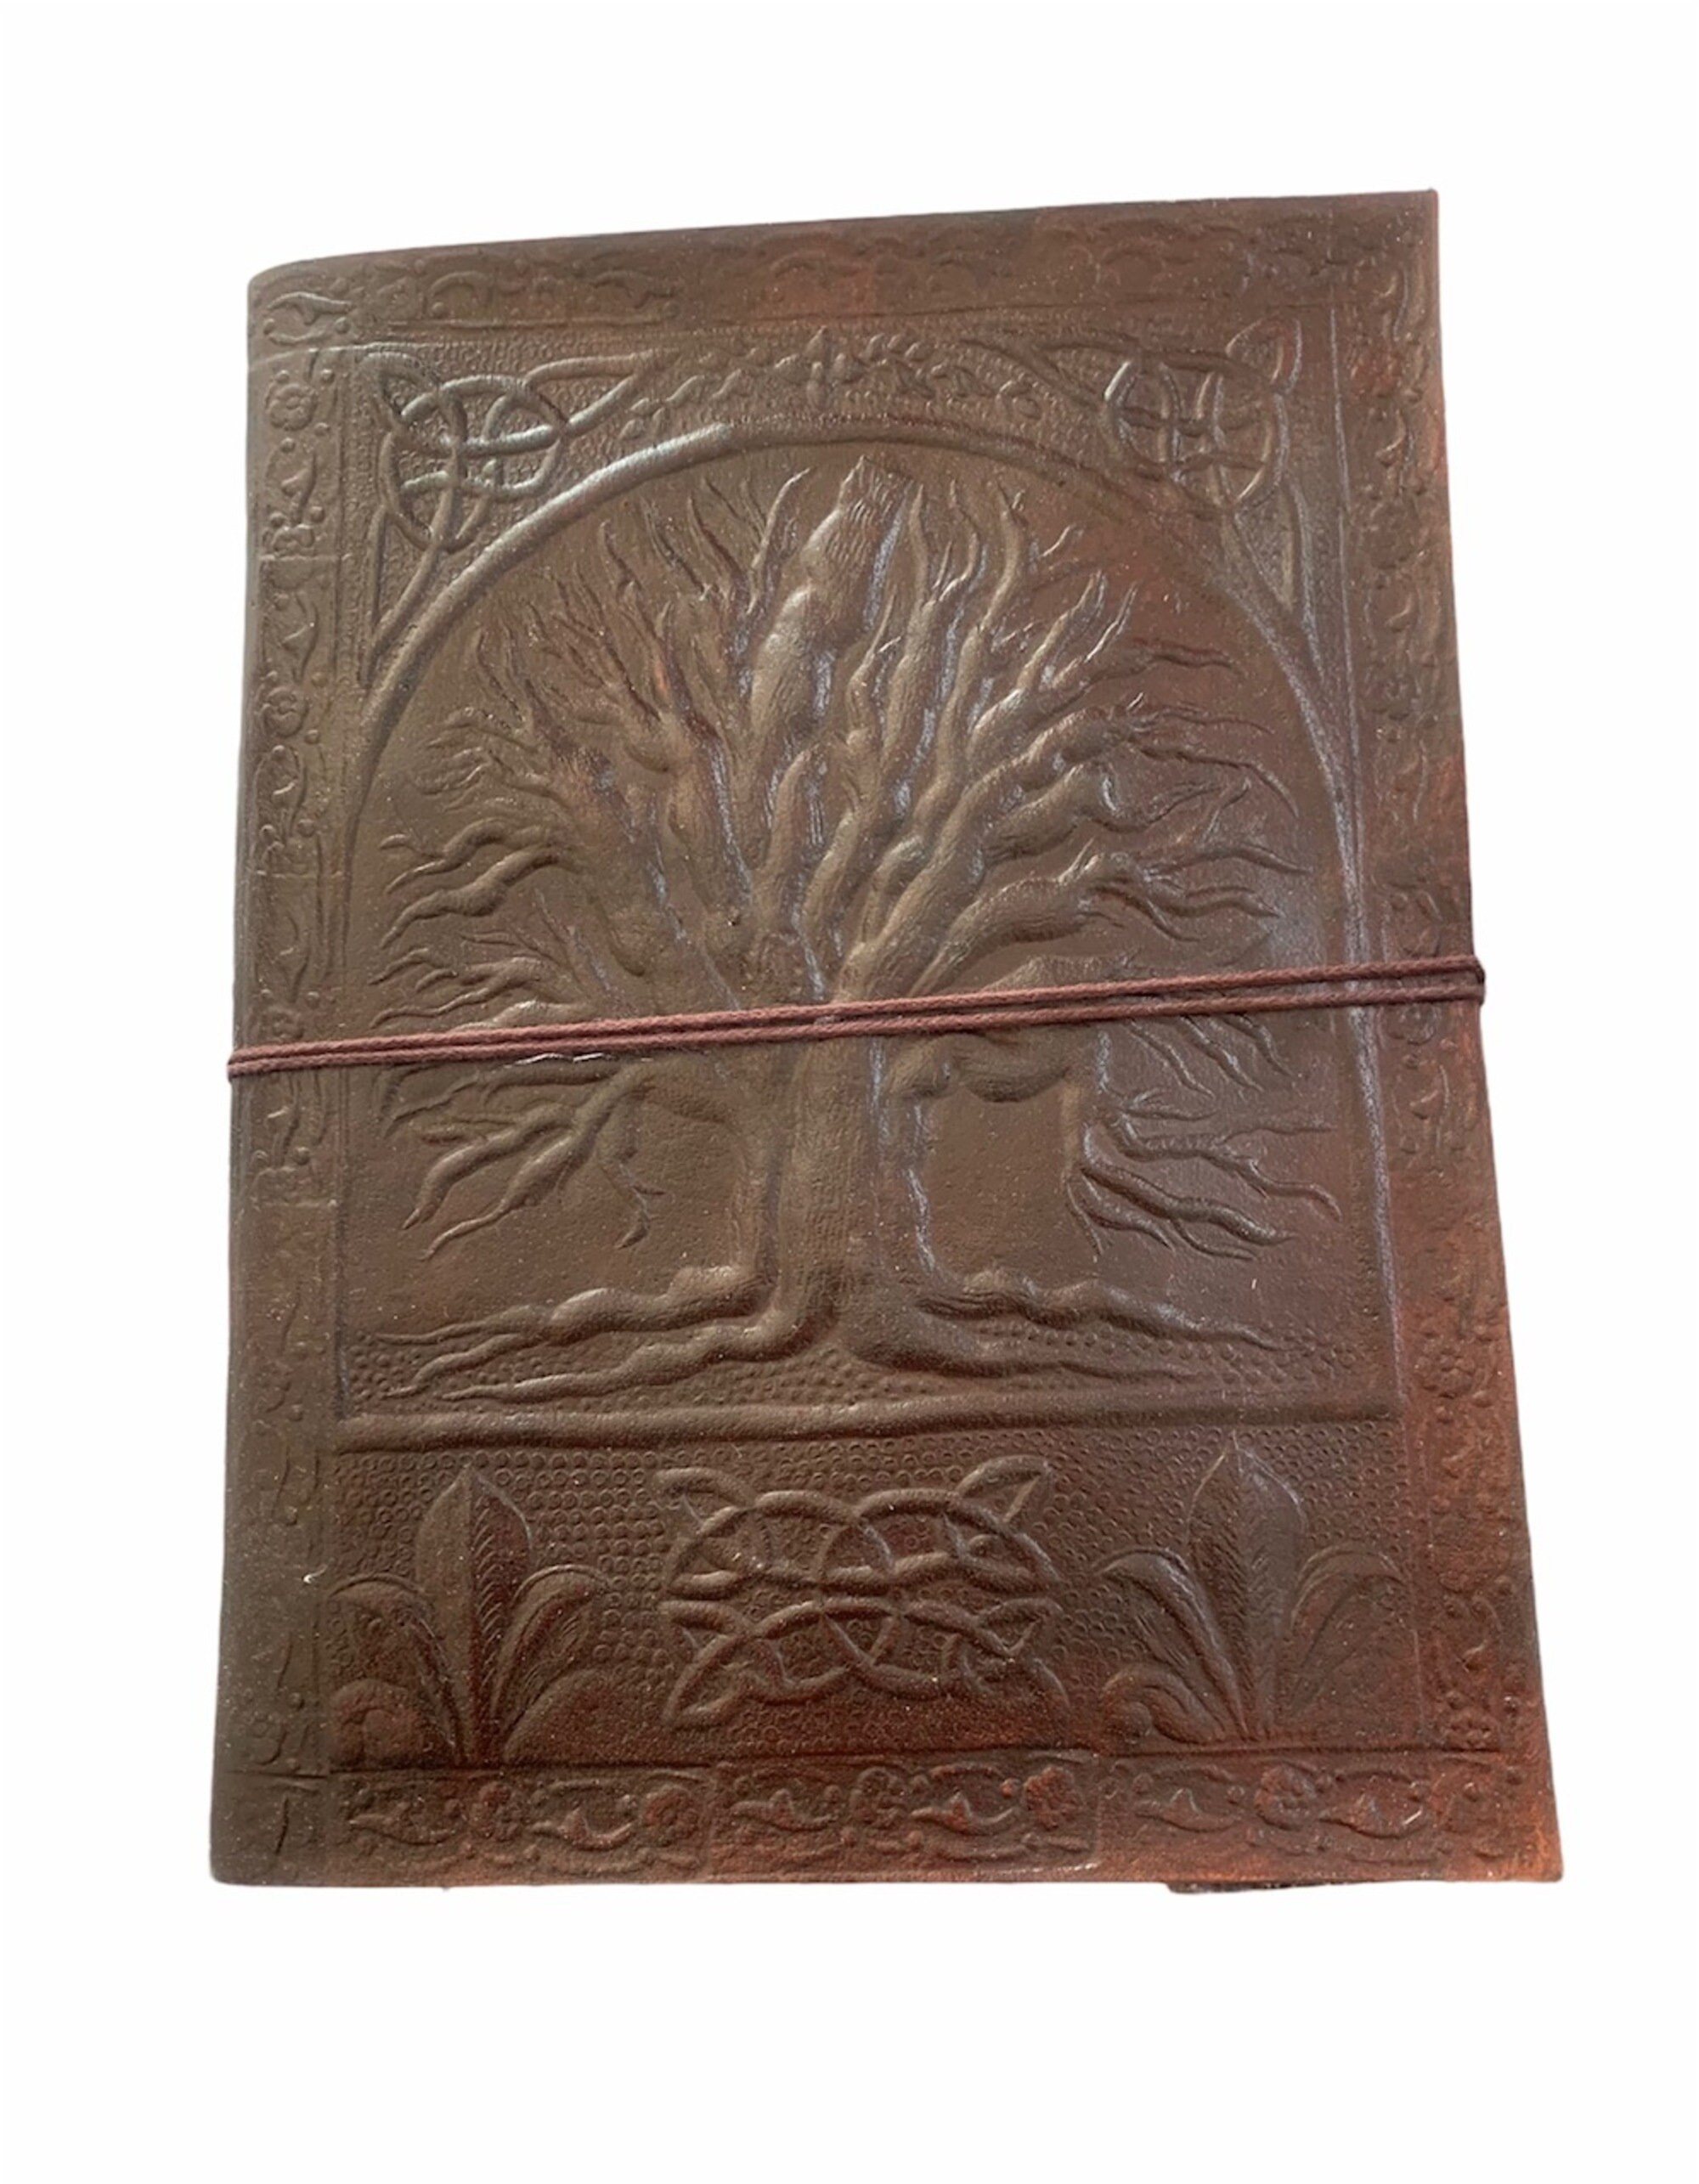 Handmade Tree Of Life pendant extra mini leather journal,leather journal,leather notebook,steampunk,leather bound,leather diary 